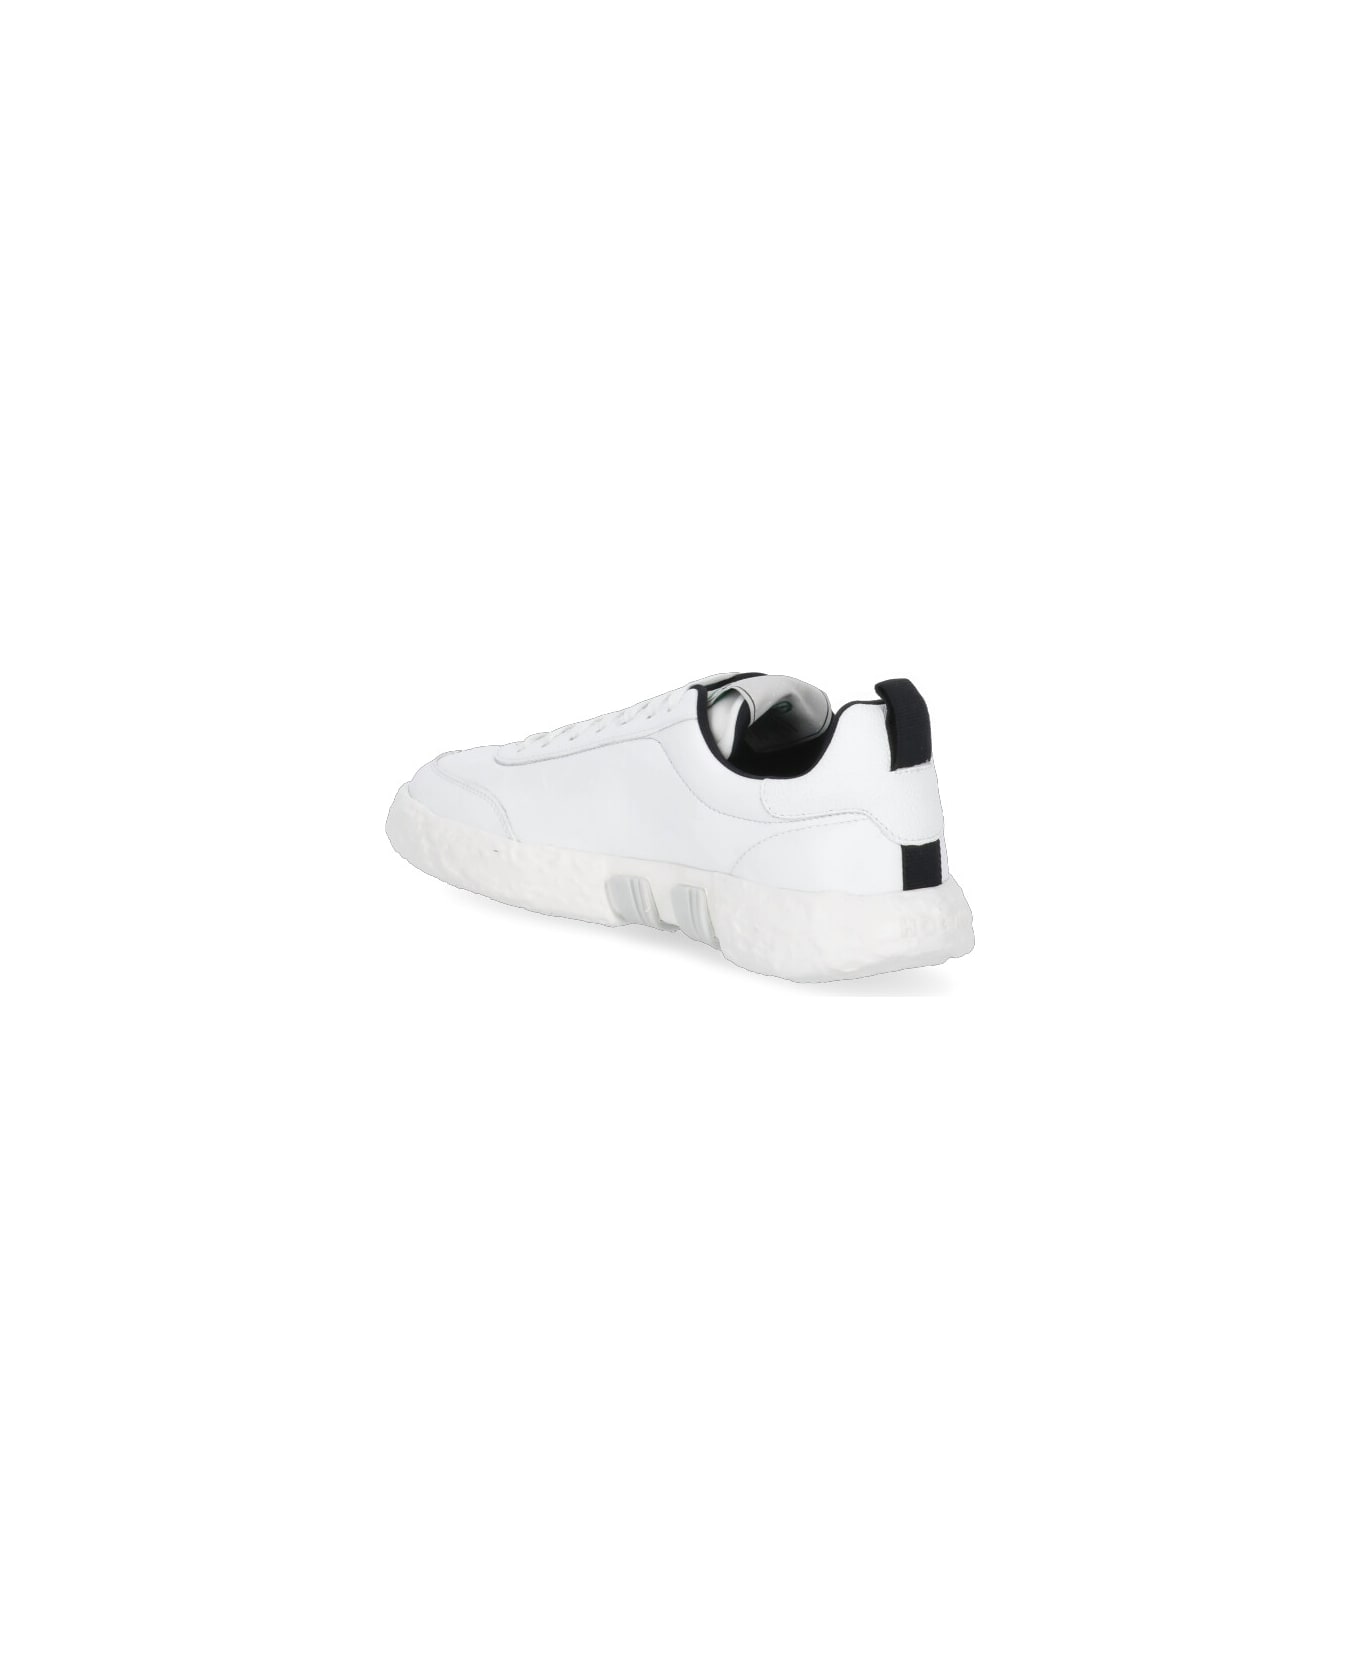 Hogan 3r Sneakers - White